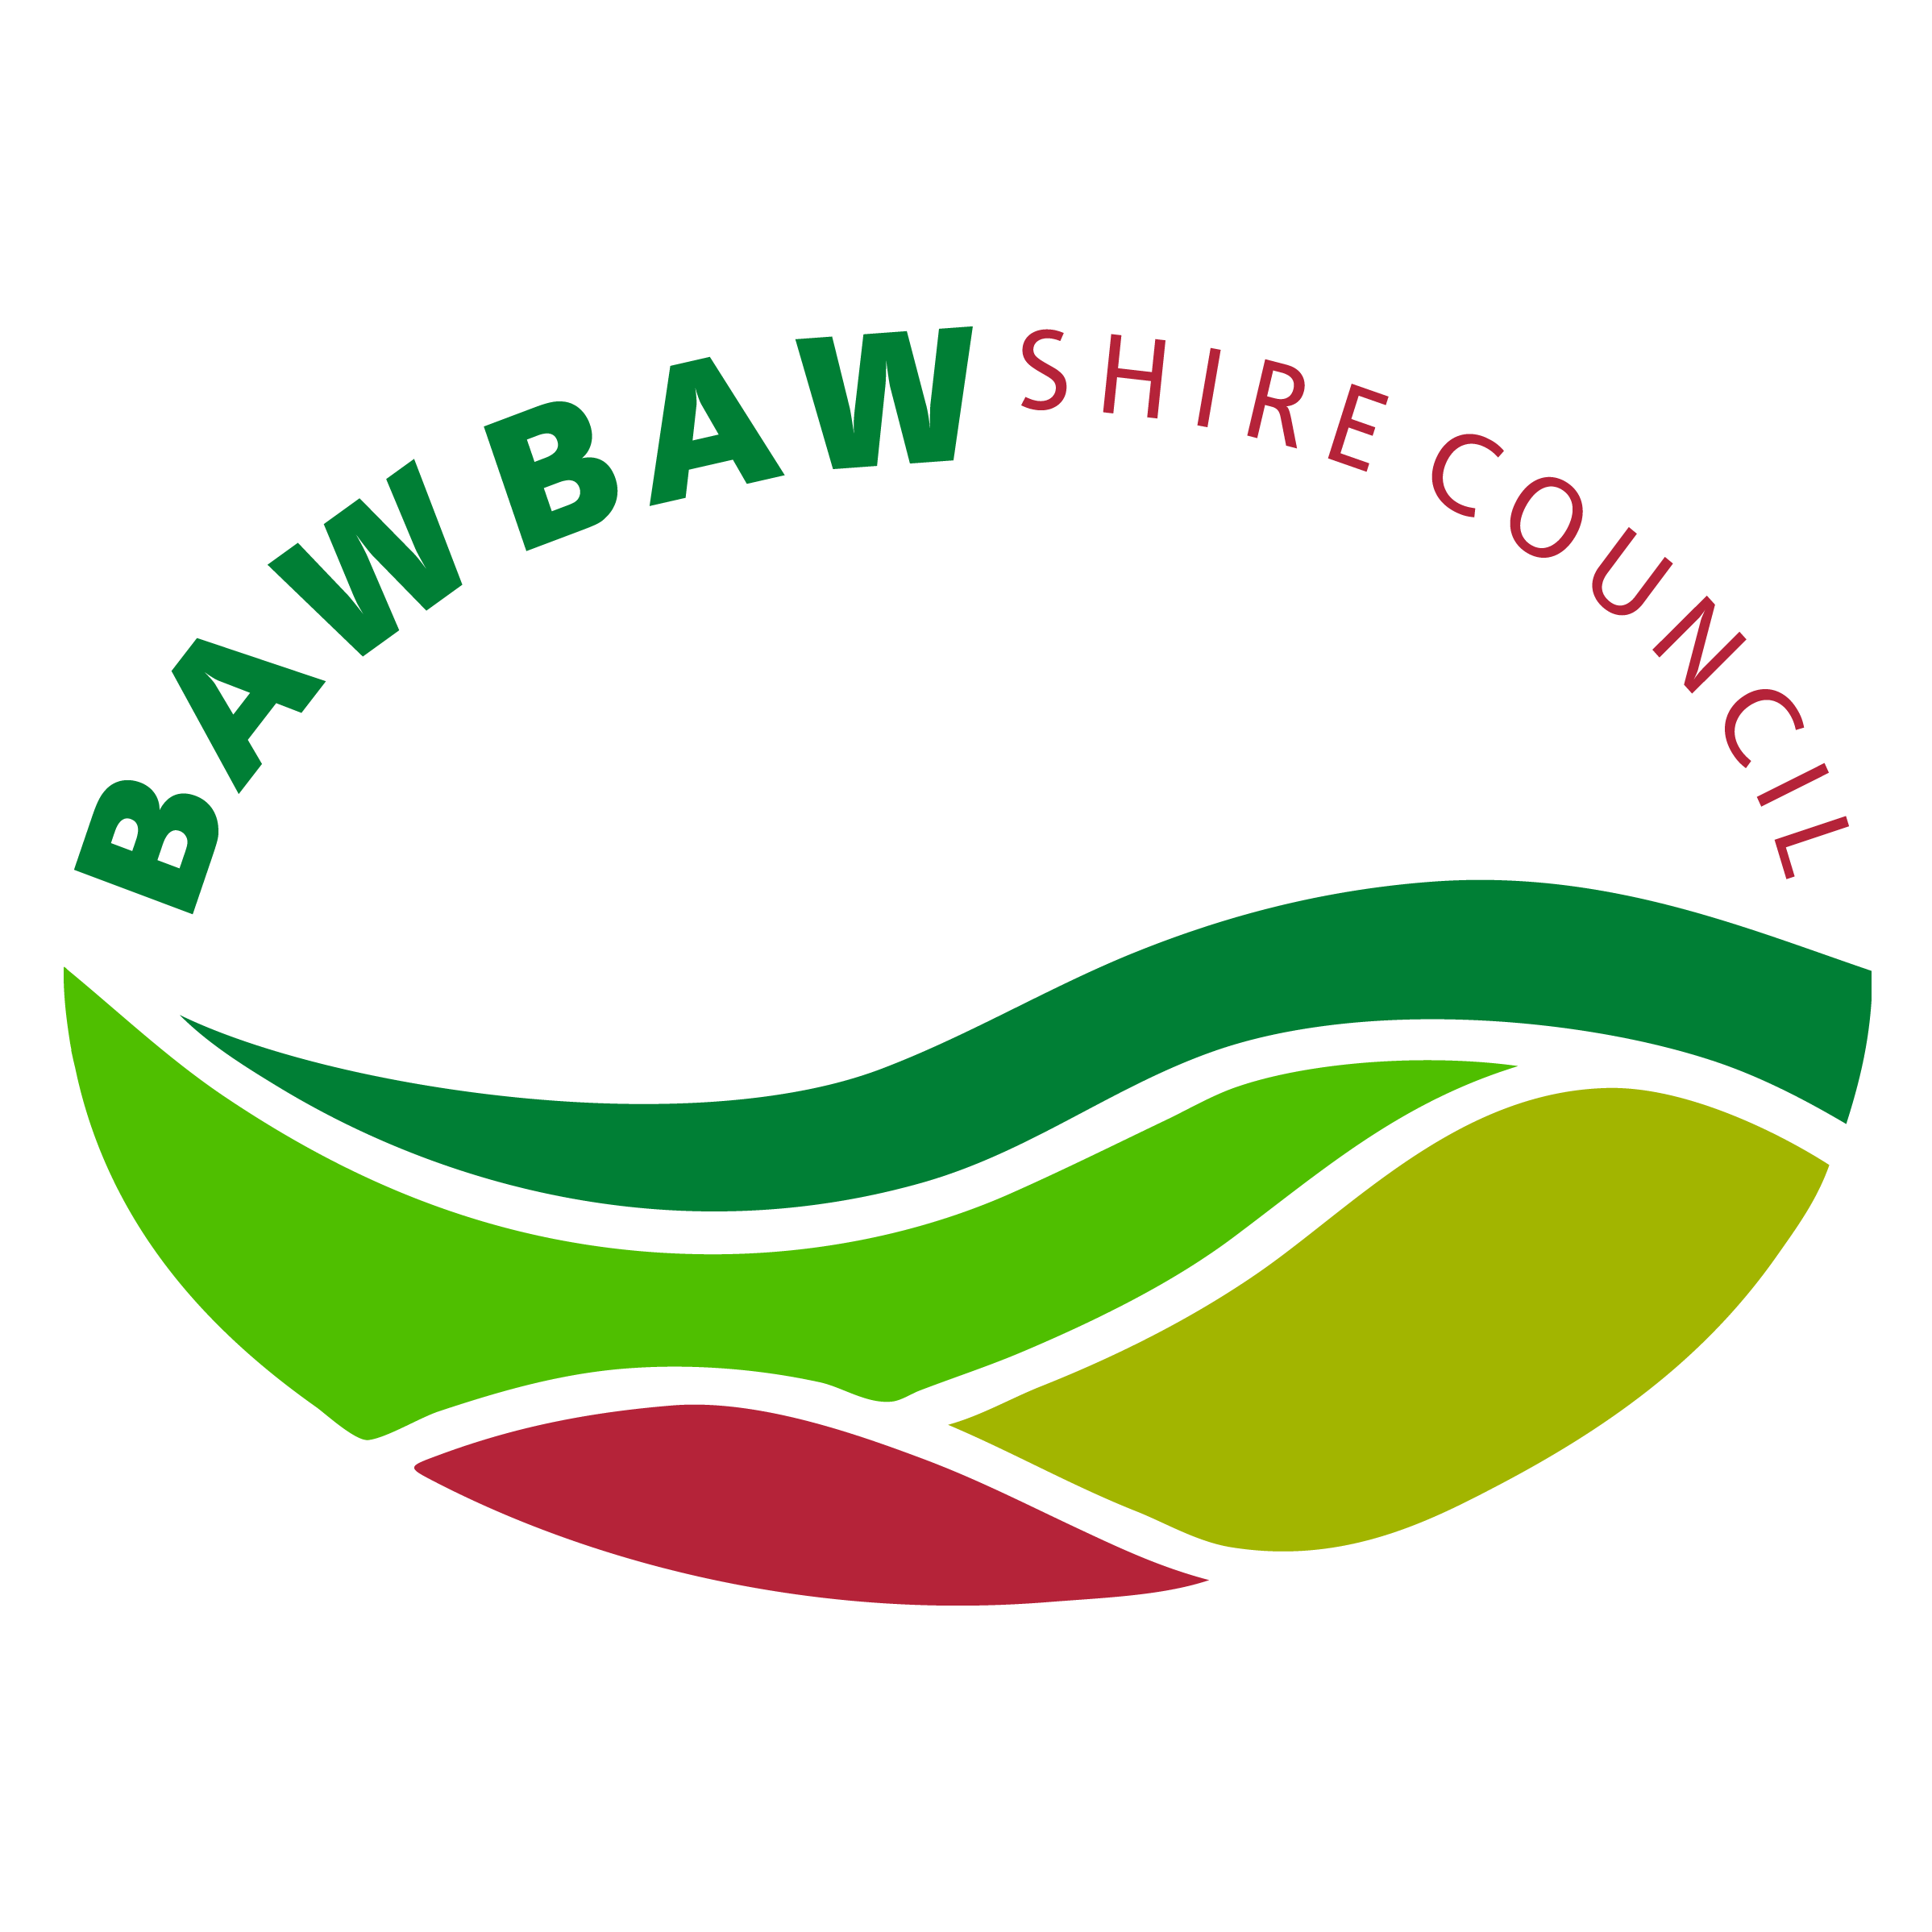 Baw Baw Shire Council - Warragul, VIC 3820 - (03) 5624 2411 | ShowMeLocal.com